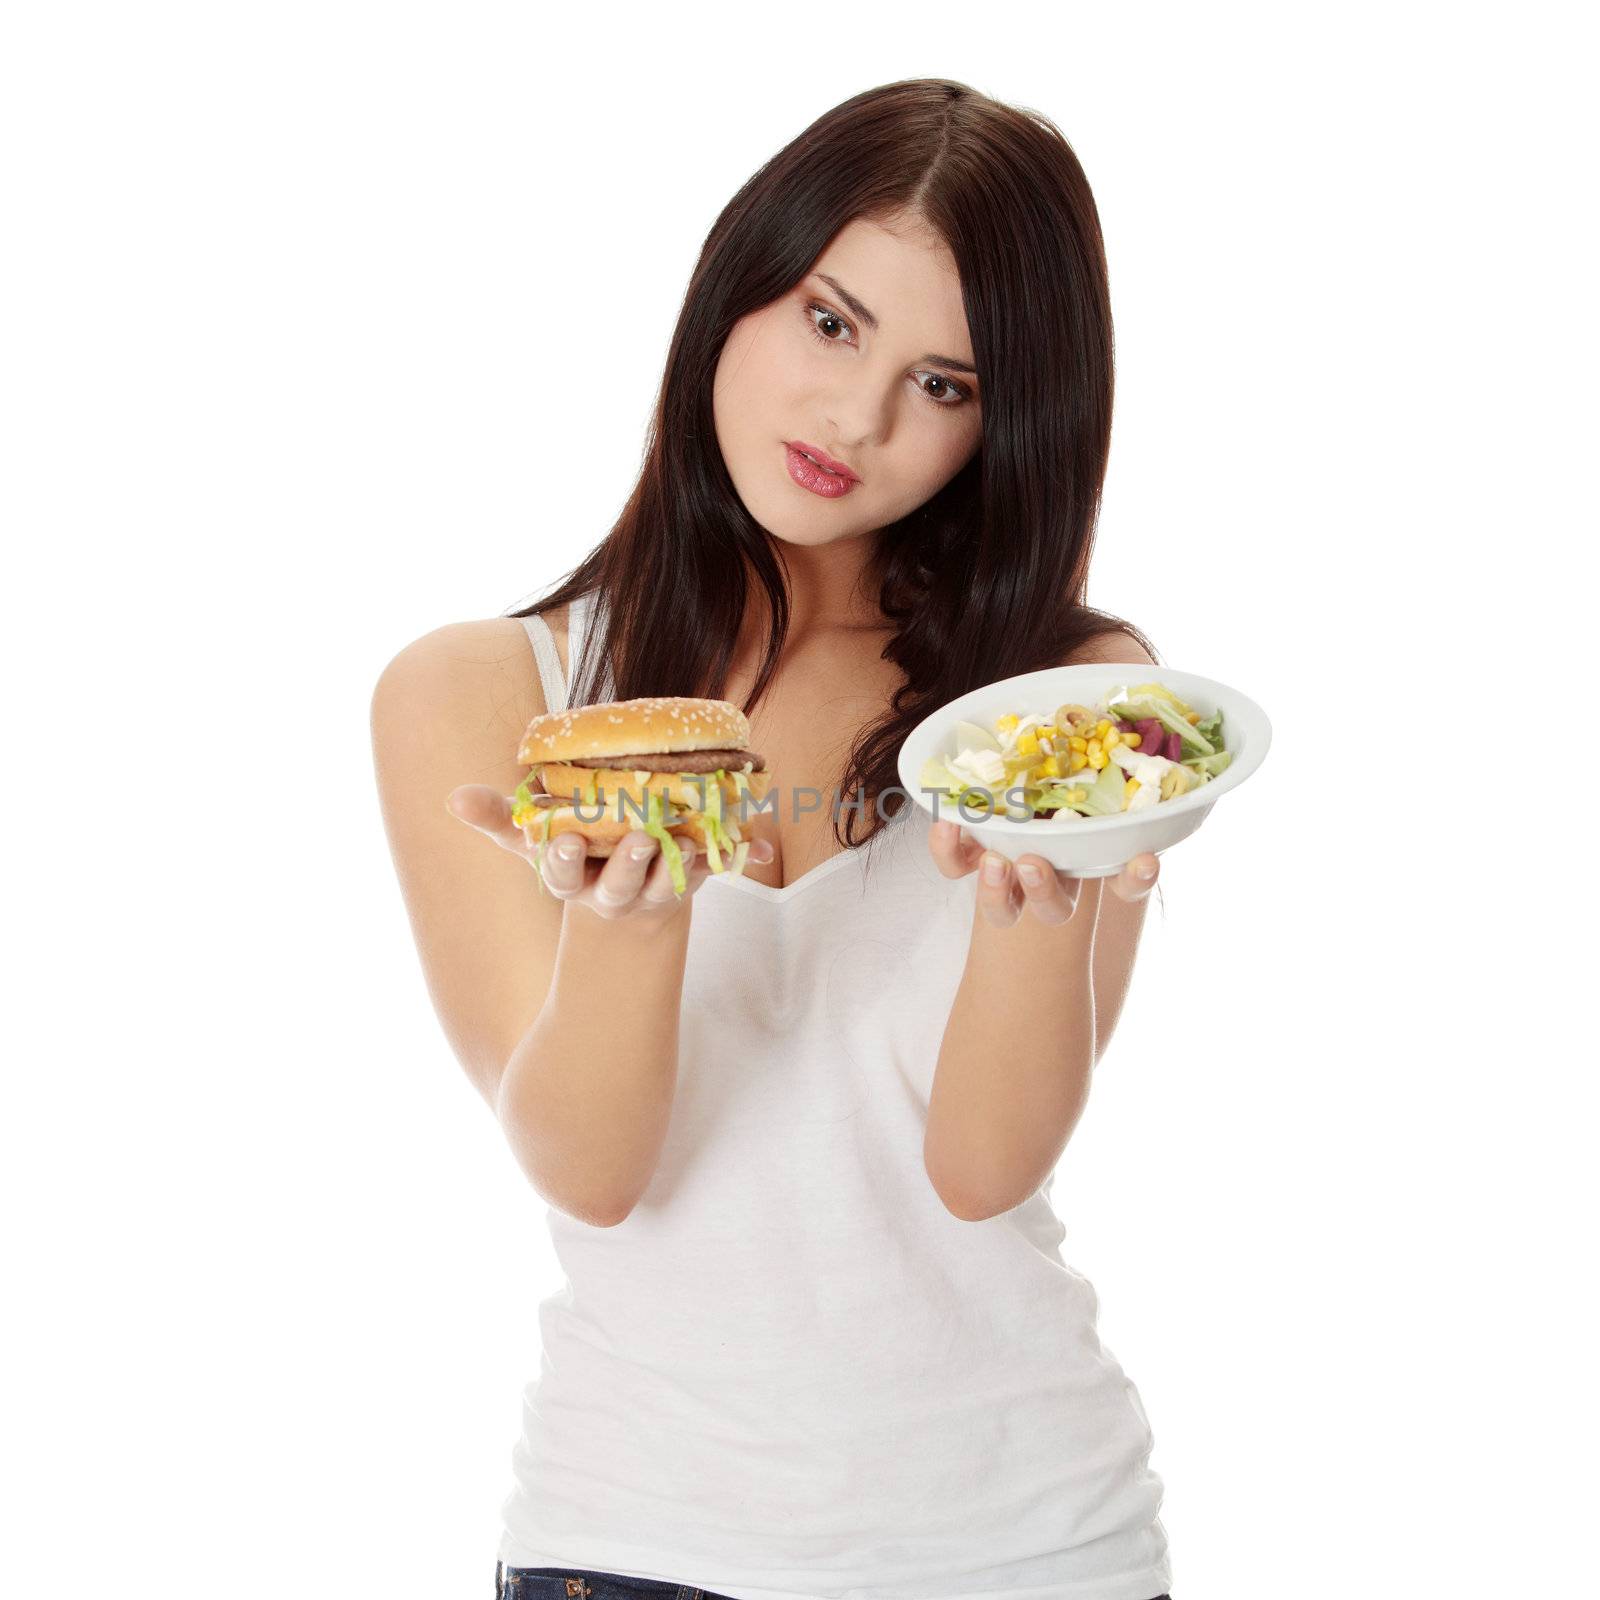 Beautiful caucasian woman thinking whot to eat: hamburger or salat. Isolated on white